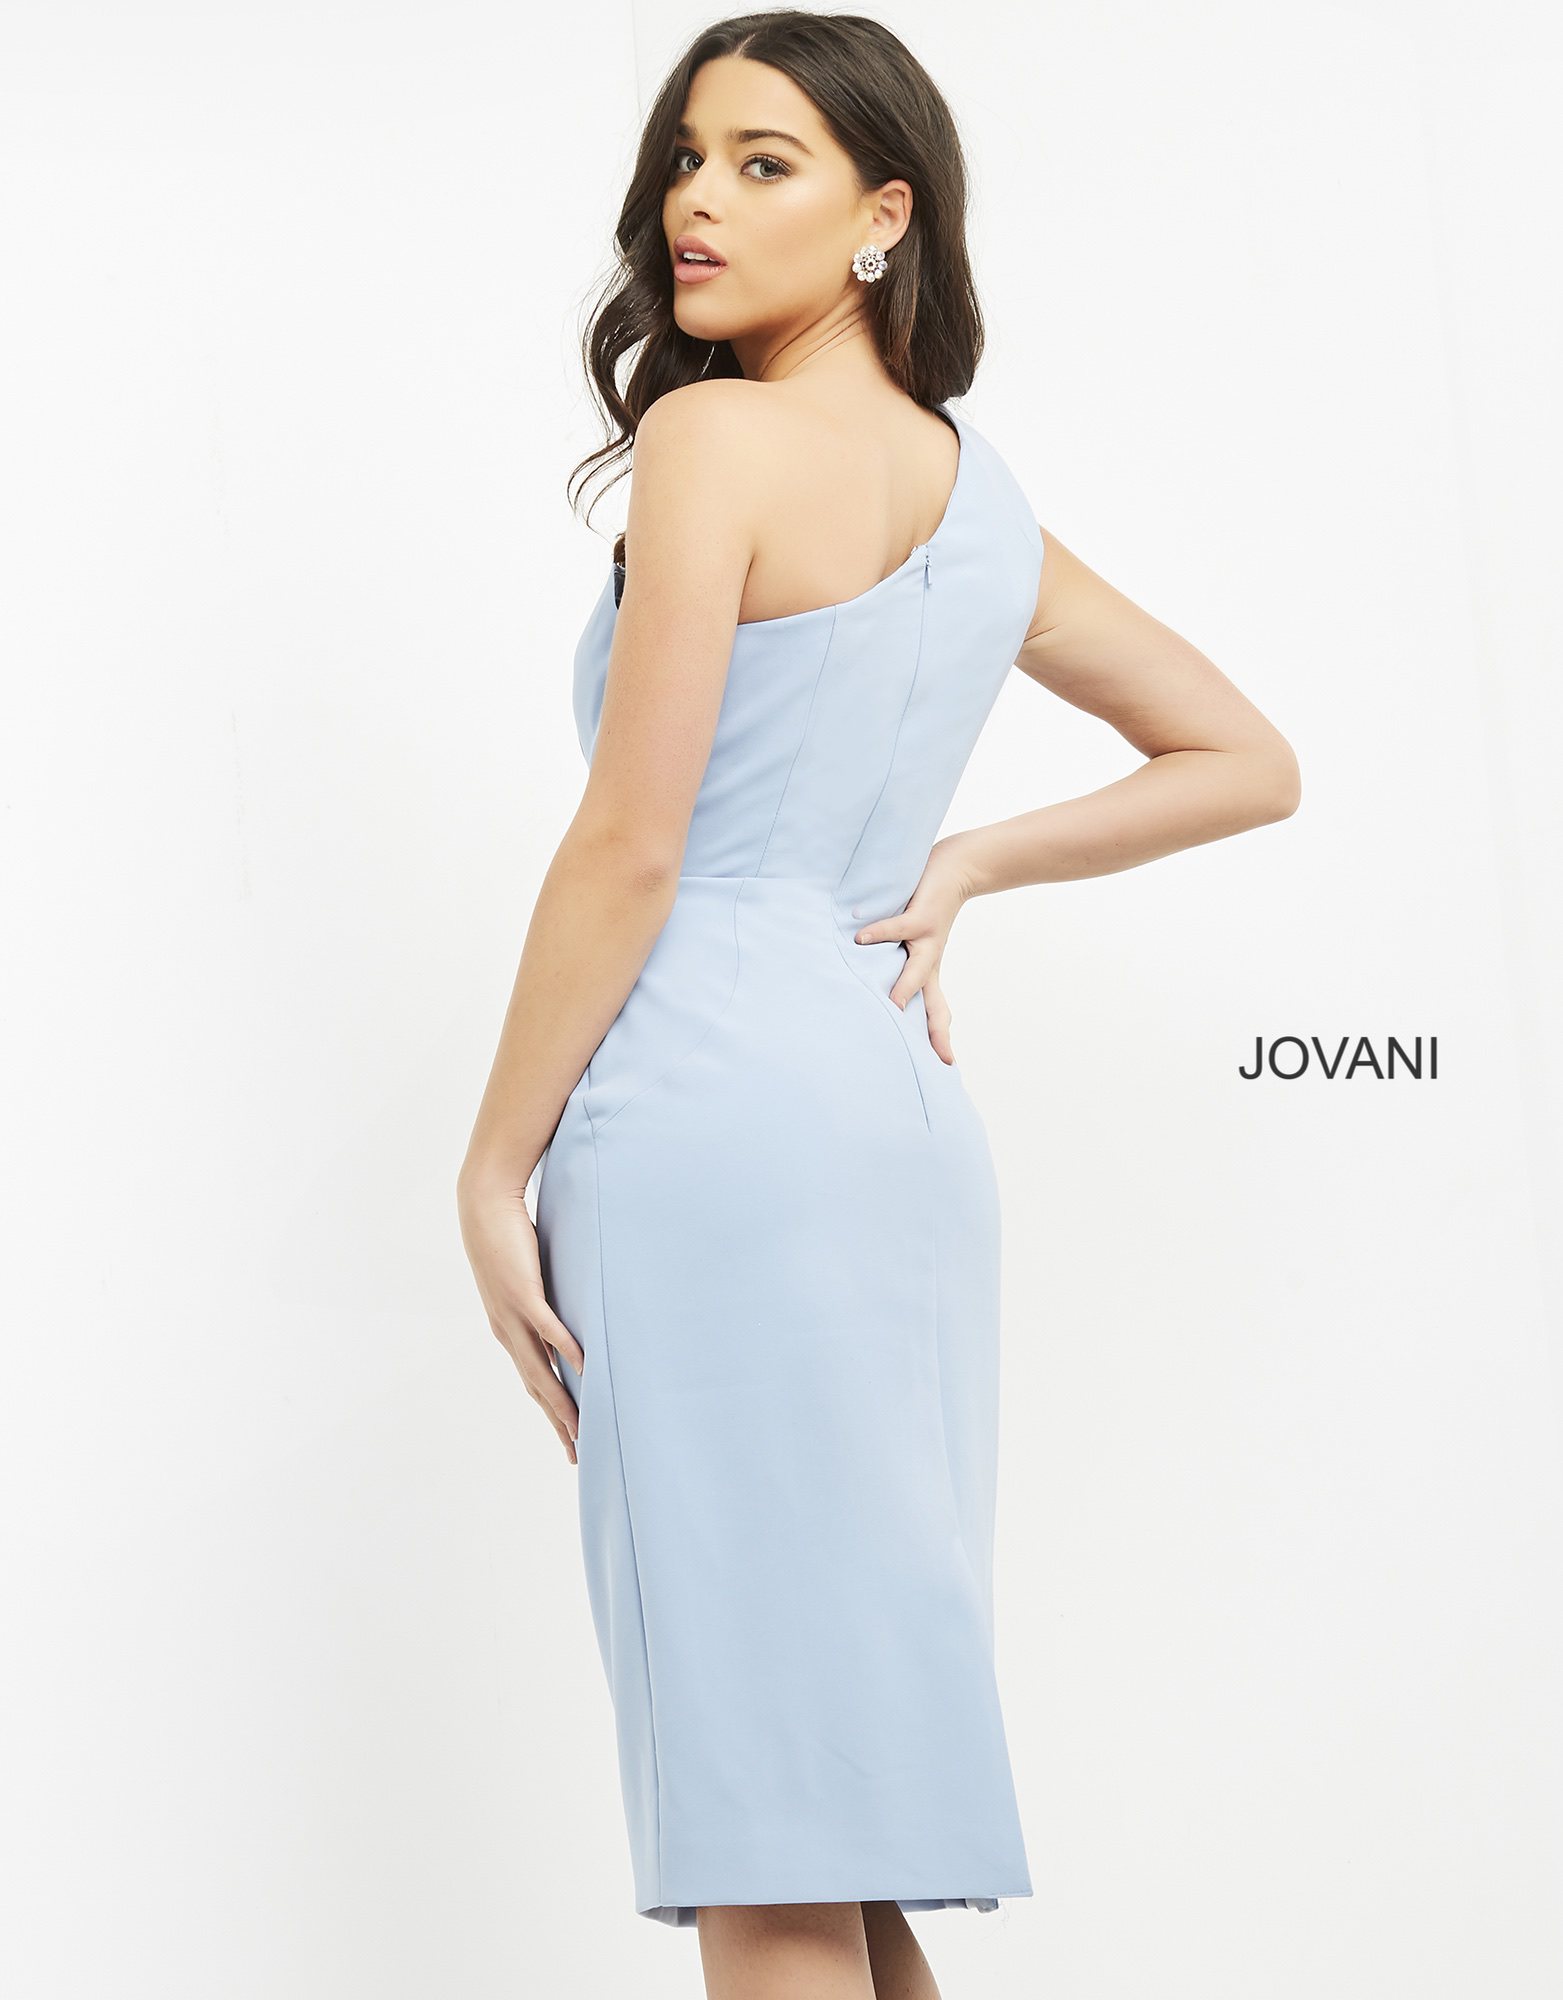 Jovani 06835 Light Blue Knee Length Ready To Wear Dress